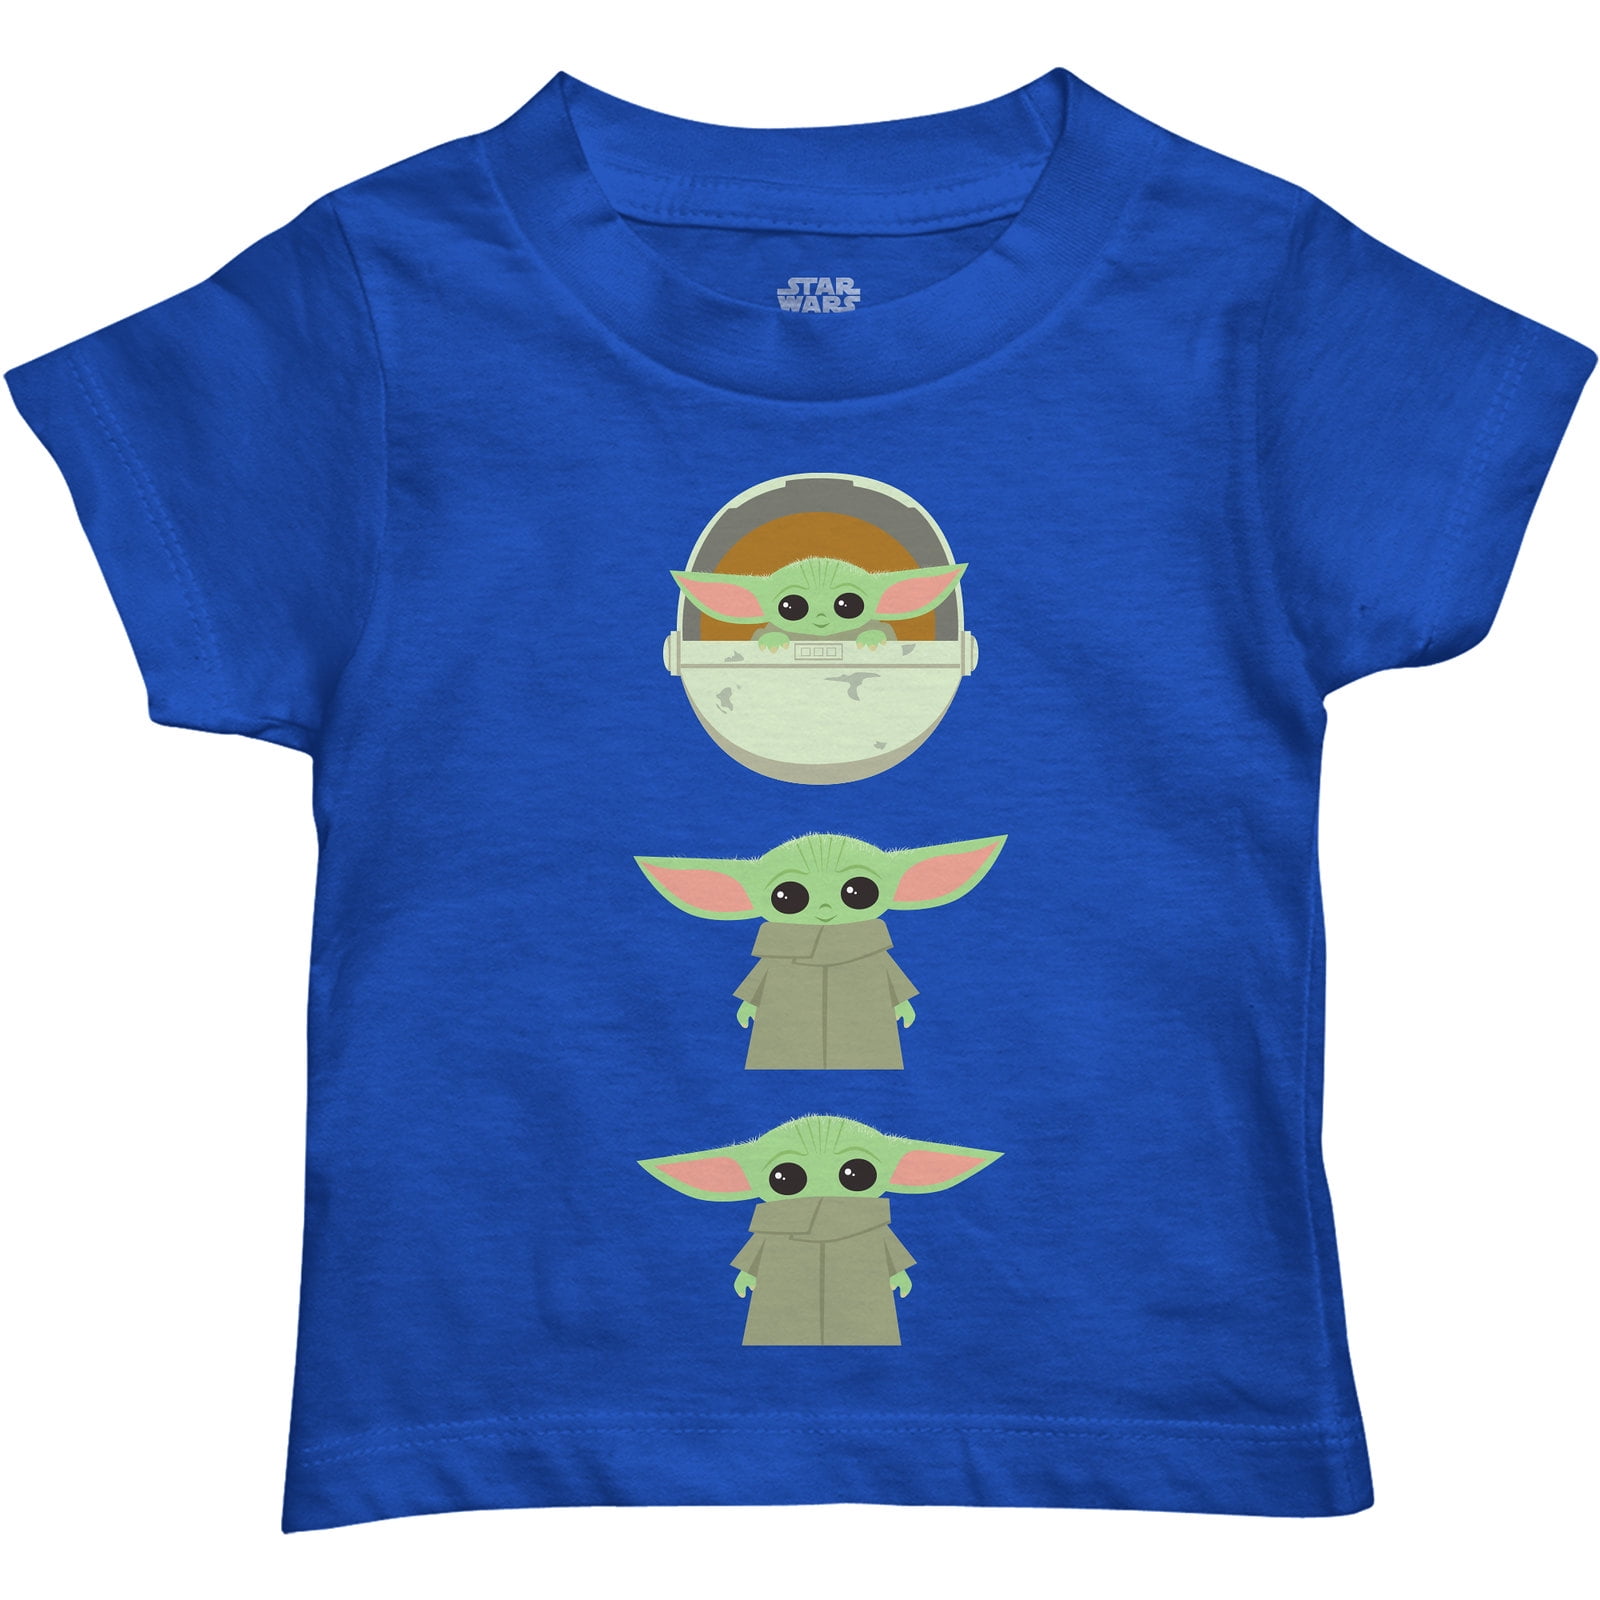 Star Wars The Mandalorian The Child Poses Baby Yoda T-Shirt (Toddler Boys)